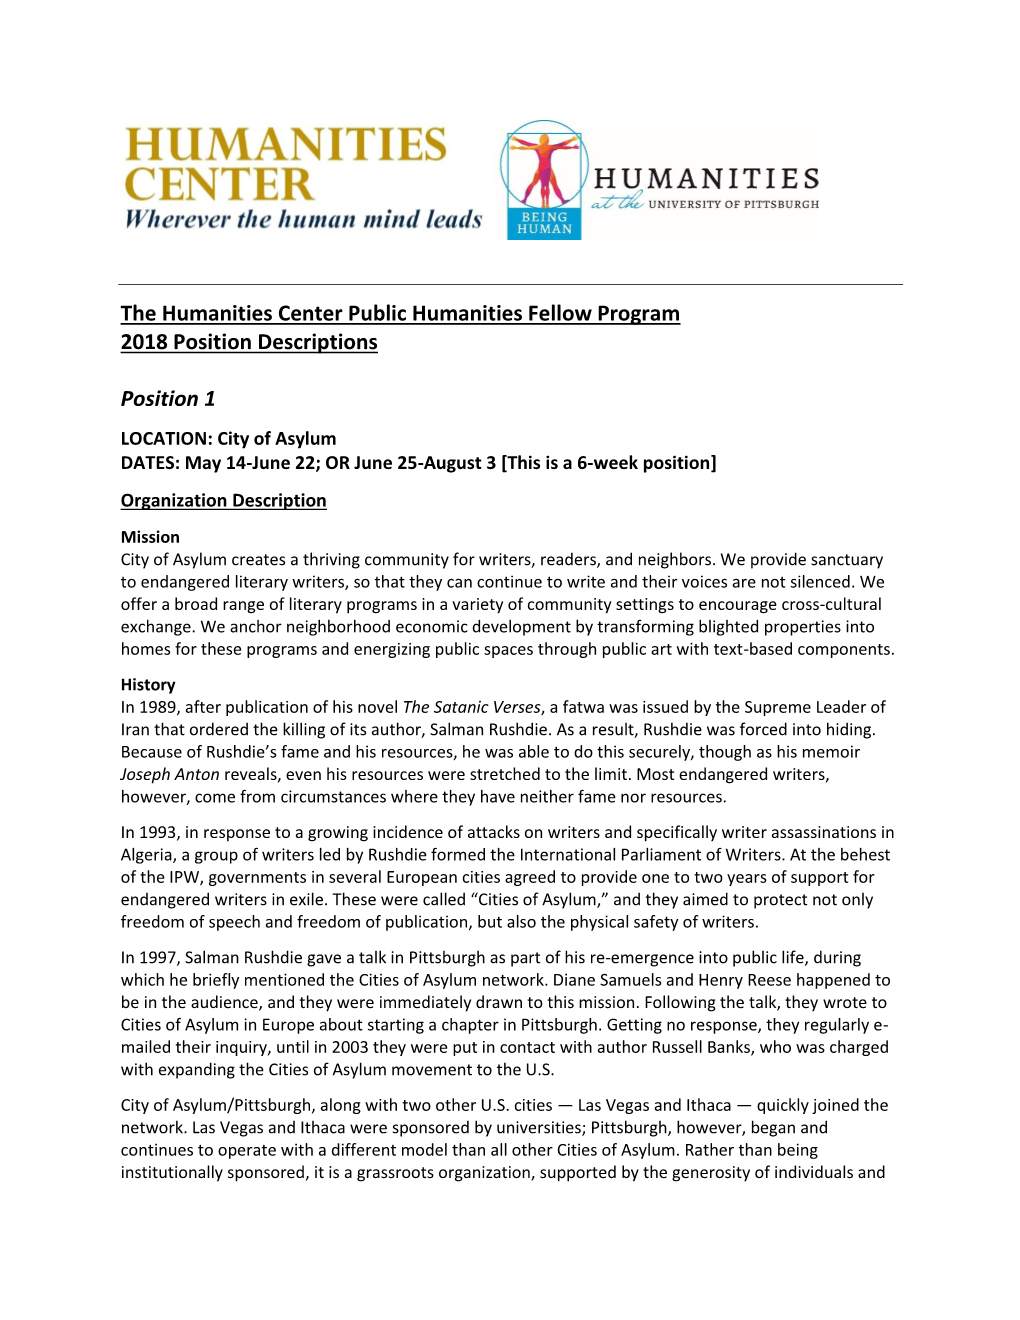 The Humanities Center Public Humanities Fellow Program 2018 Position Descriptions Position 1